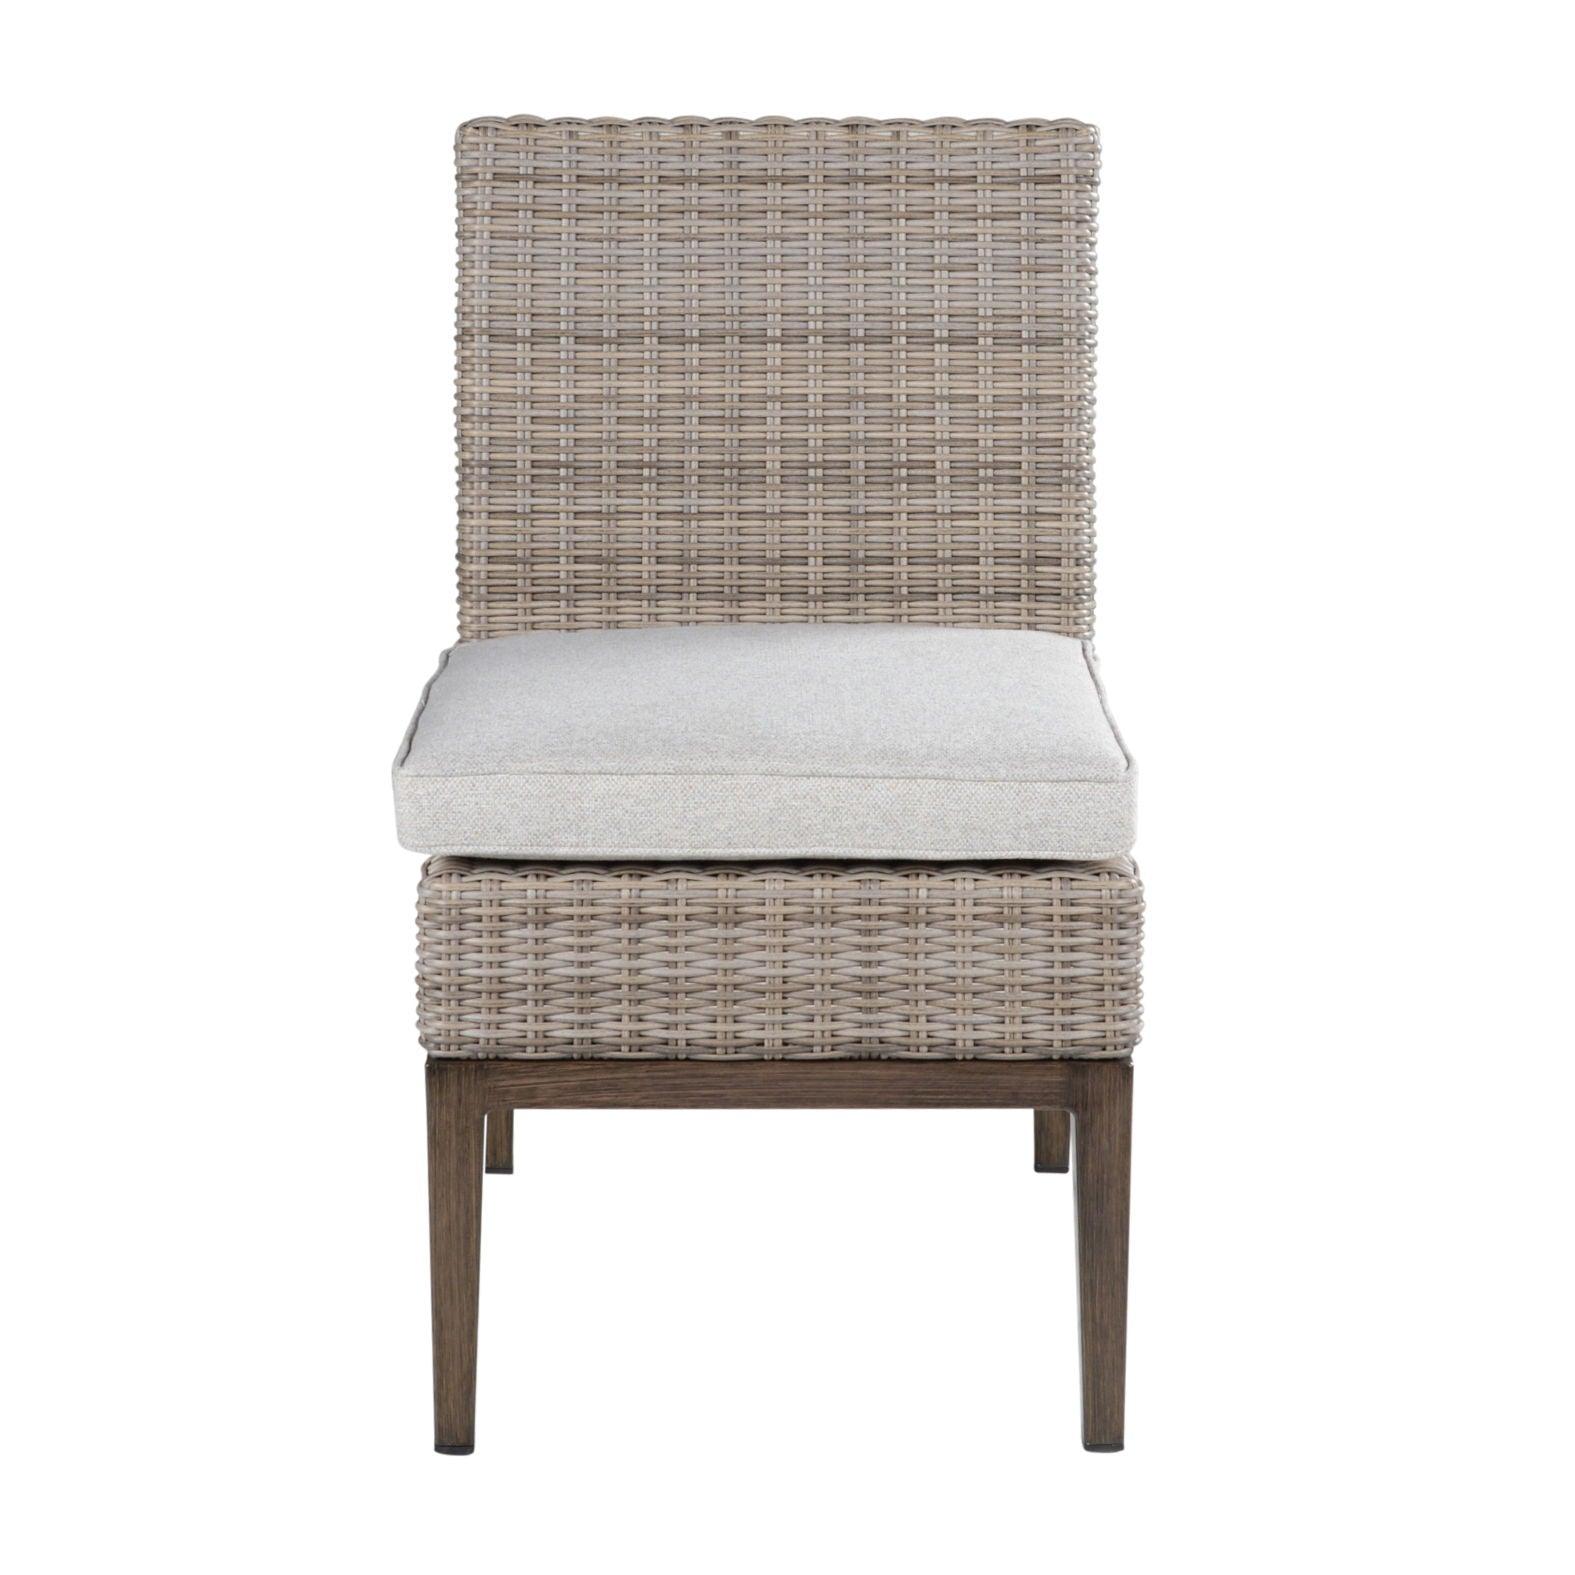 Steve Silver Furniture - Marina - Patio Side Chair (Set of 2) - Brown Light - 5th Avenue Furniture